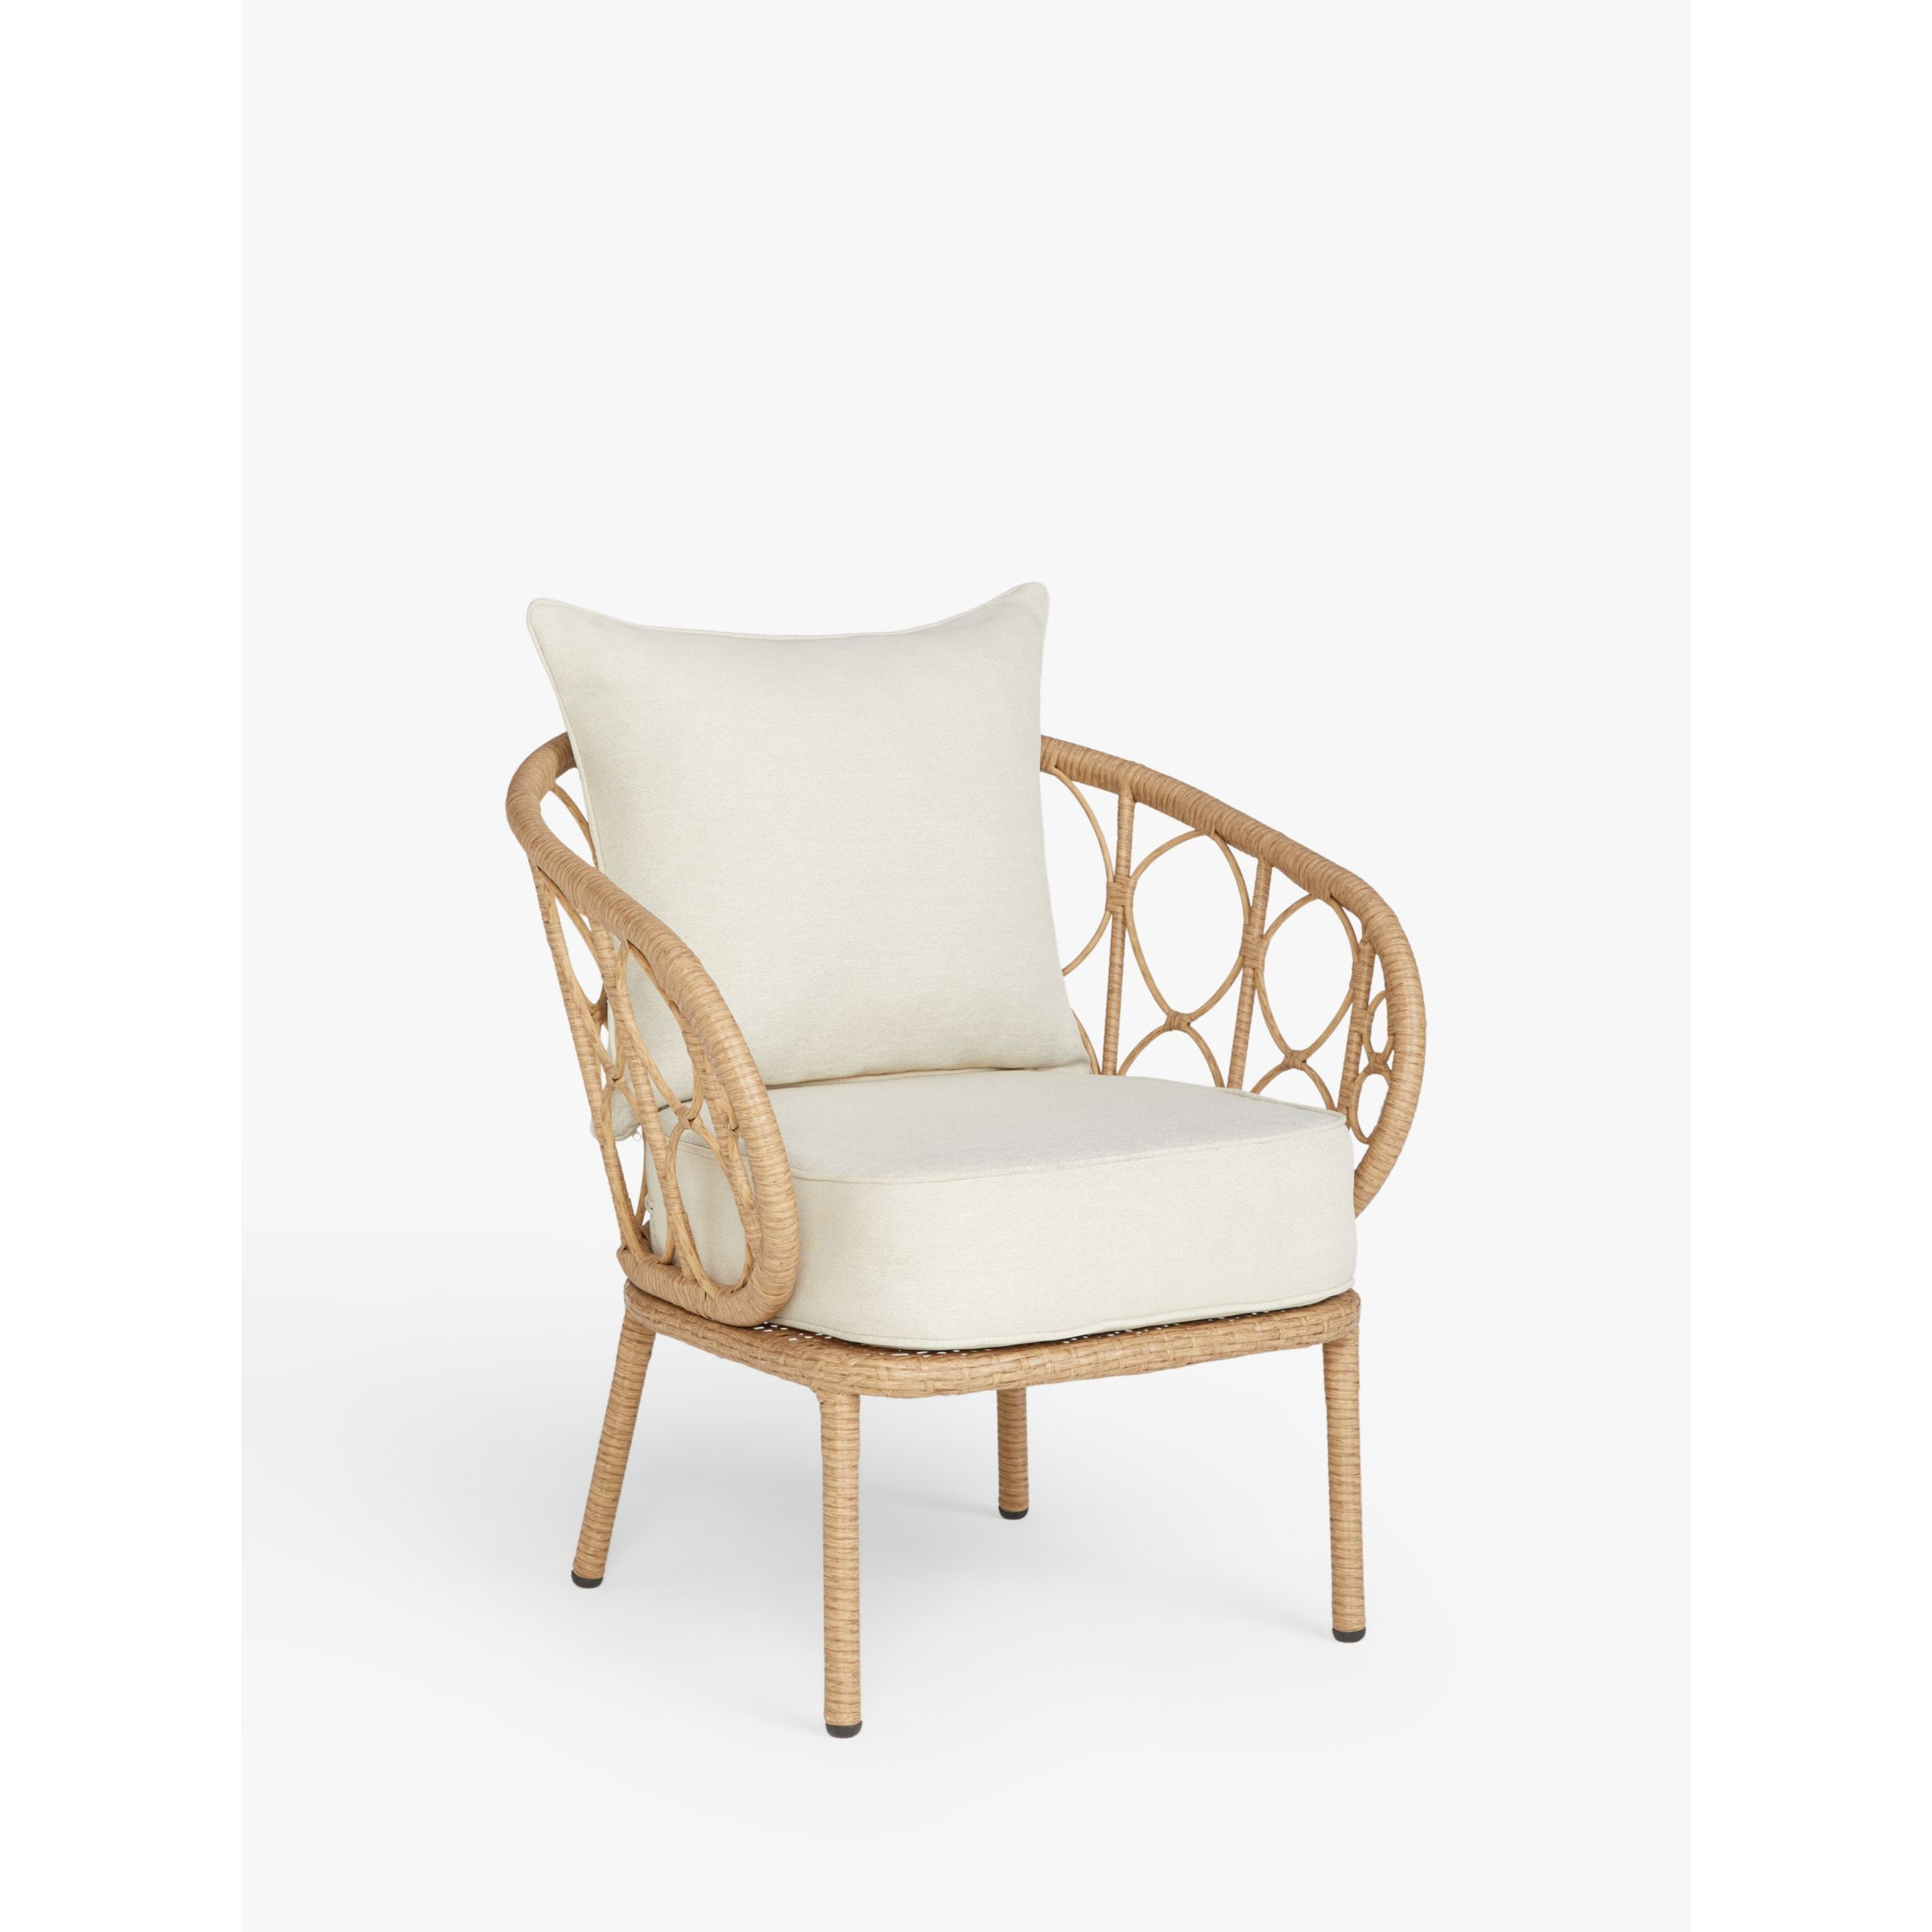 John Lewis Infinity Cane Garden Lounge Chair, Natural - image 1